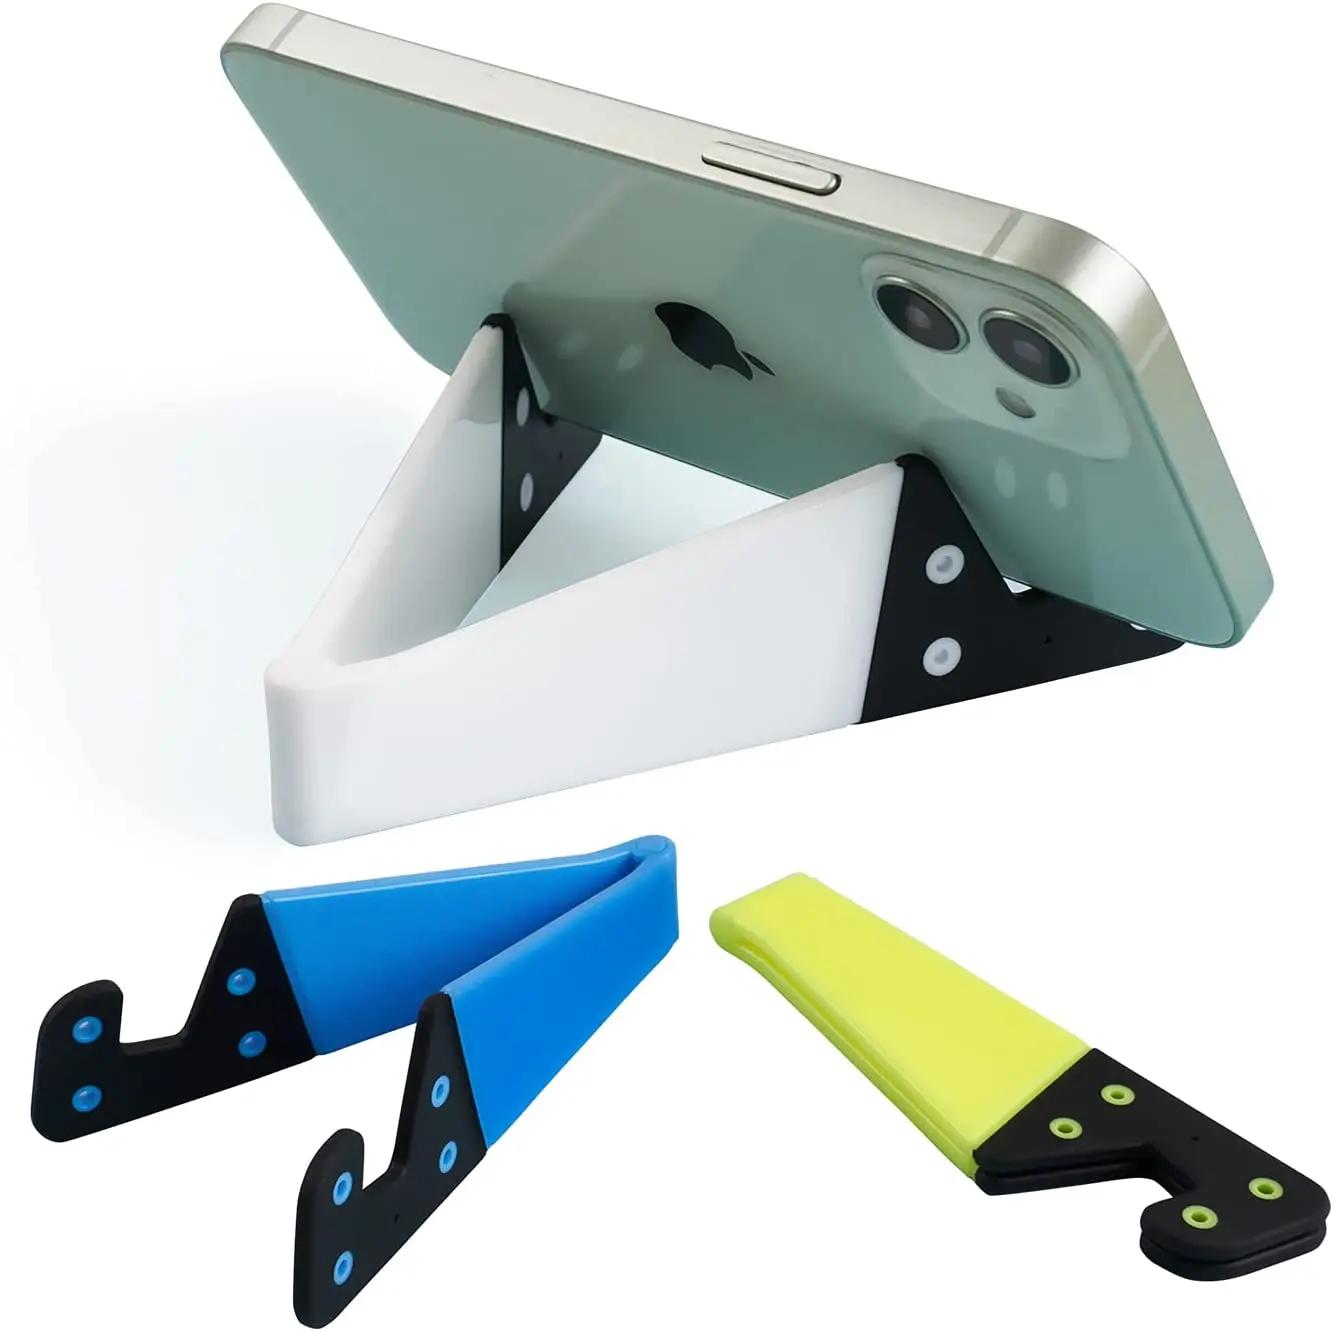 

Portable Cell Phone Stand for Desk, Foldable Pocket Travel Mobile Phone Holder, Upgrade Universal V Smartphone Kickstand Mount